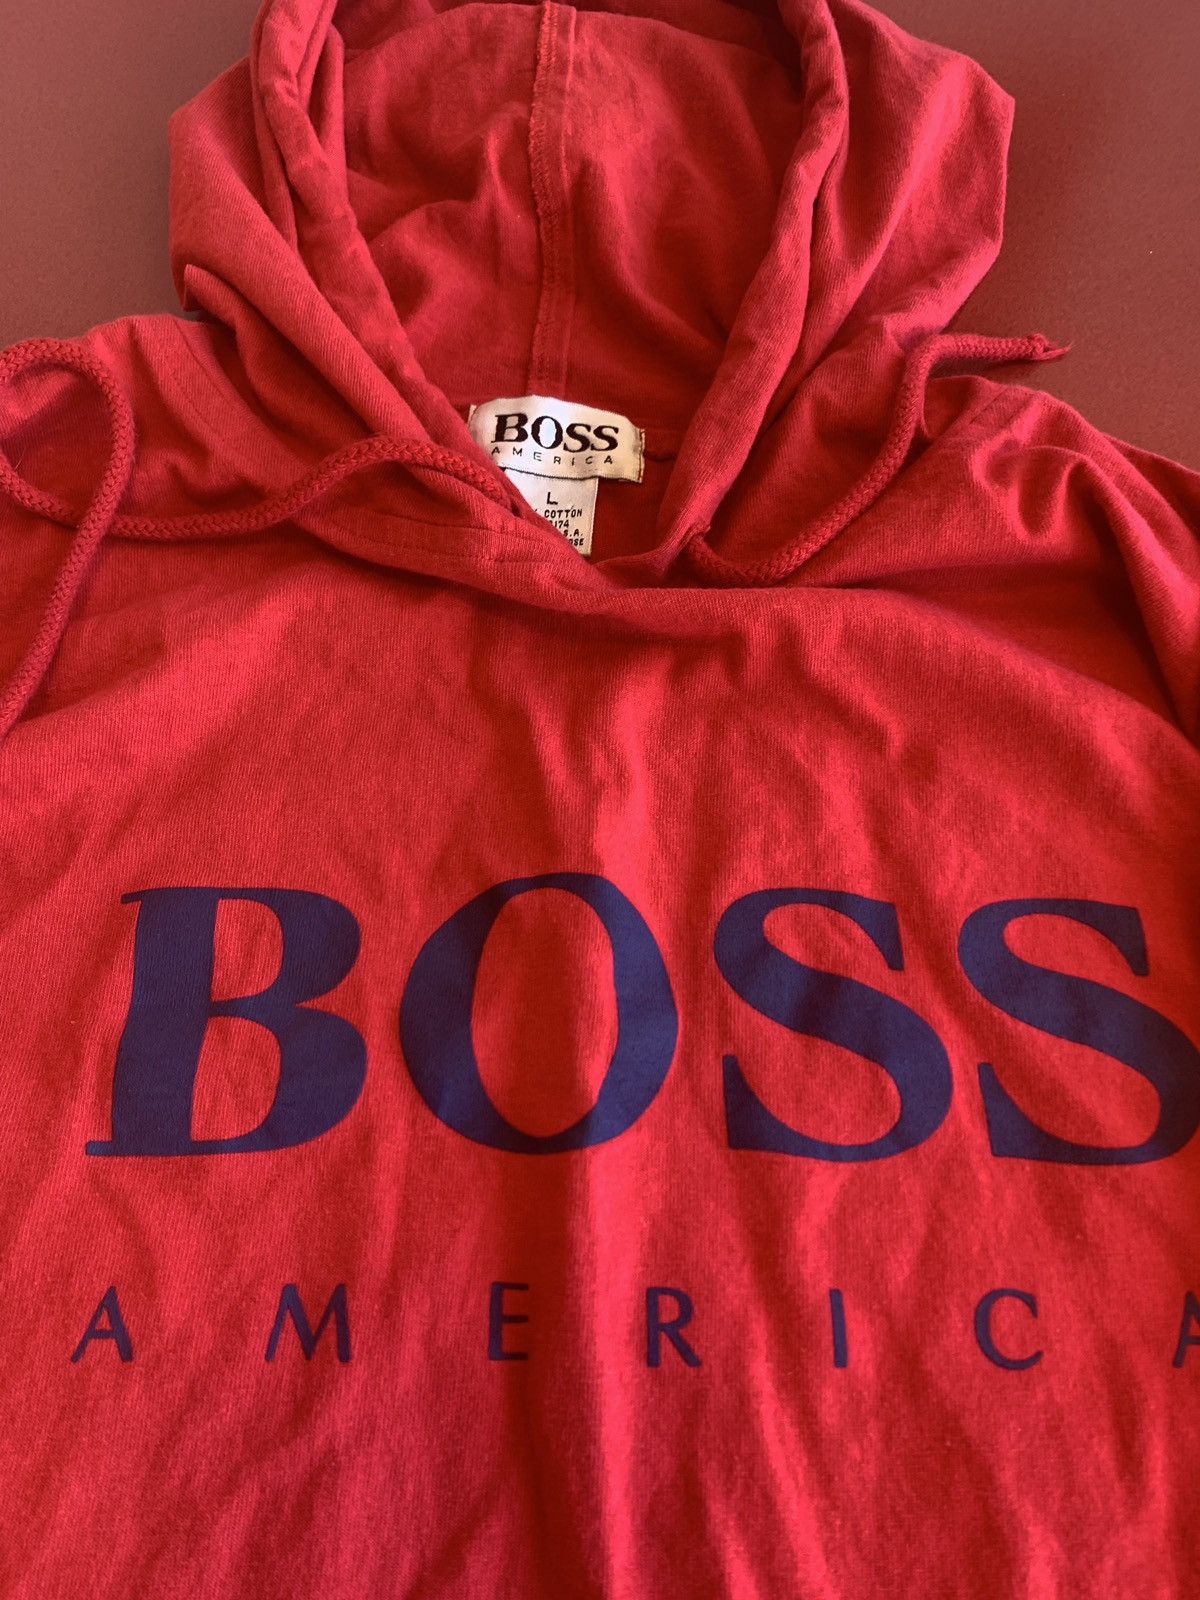 Hugo Boss Vintage Boss America Hoodie Size US L / EU 52-54 / 3 - 2 Preview